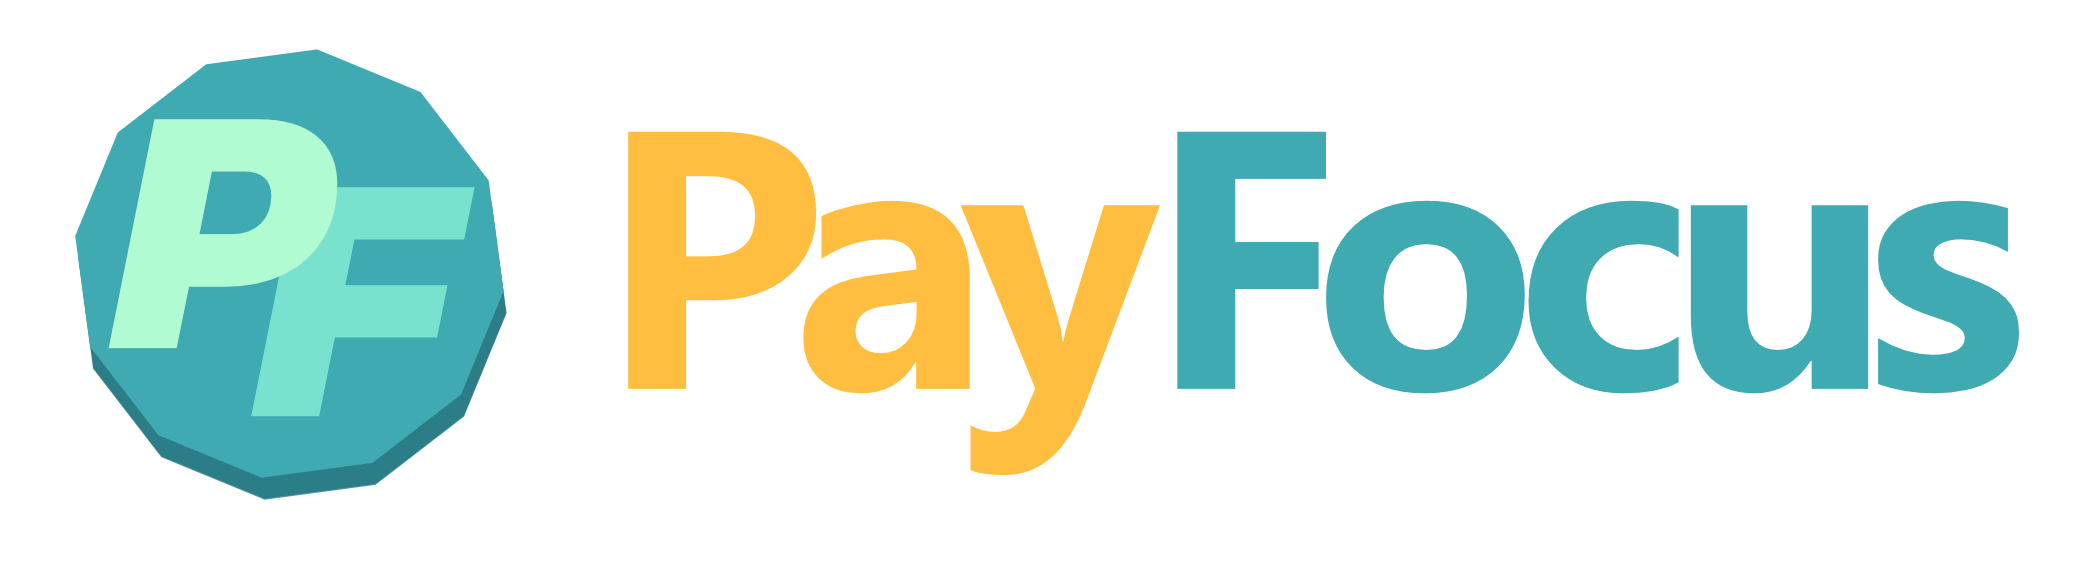 PayFocus Payroll